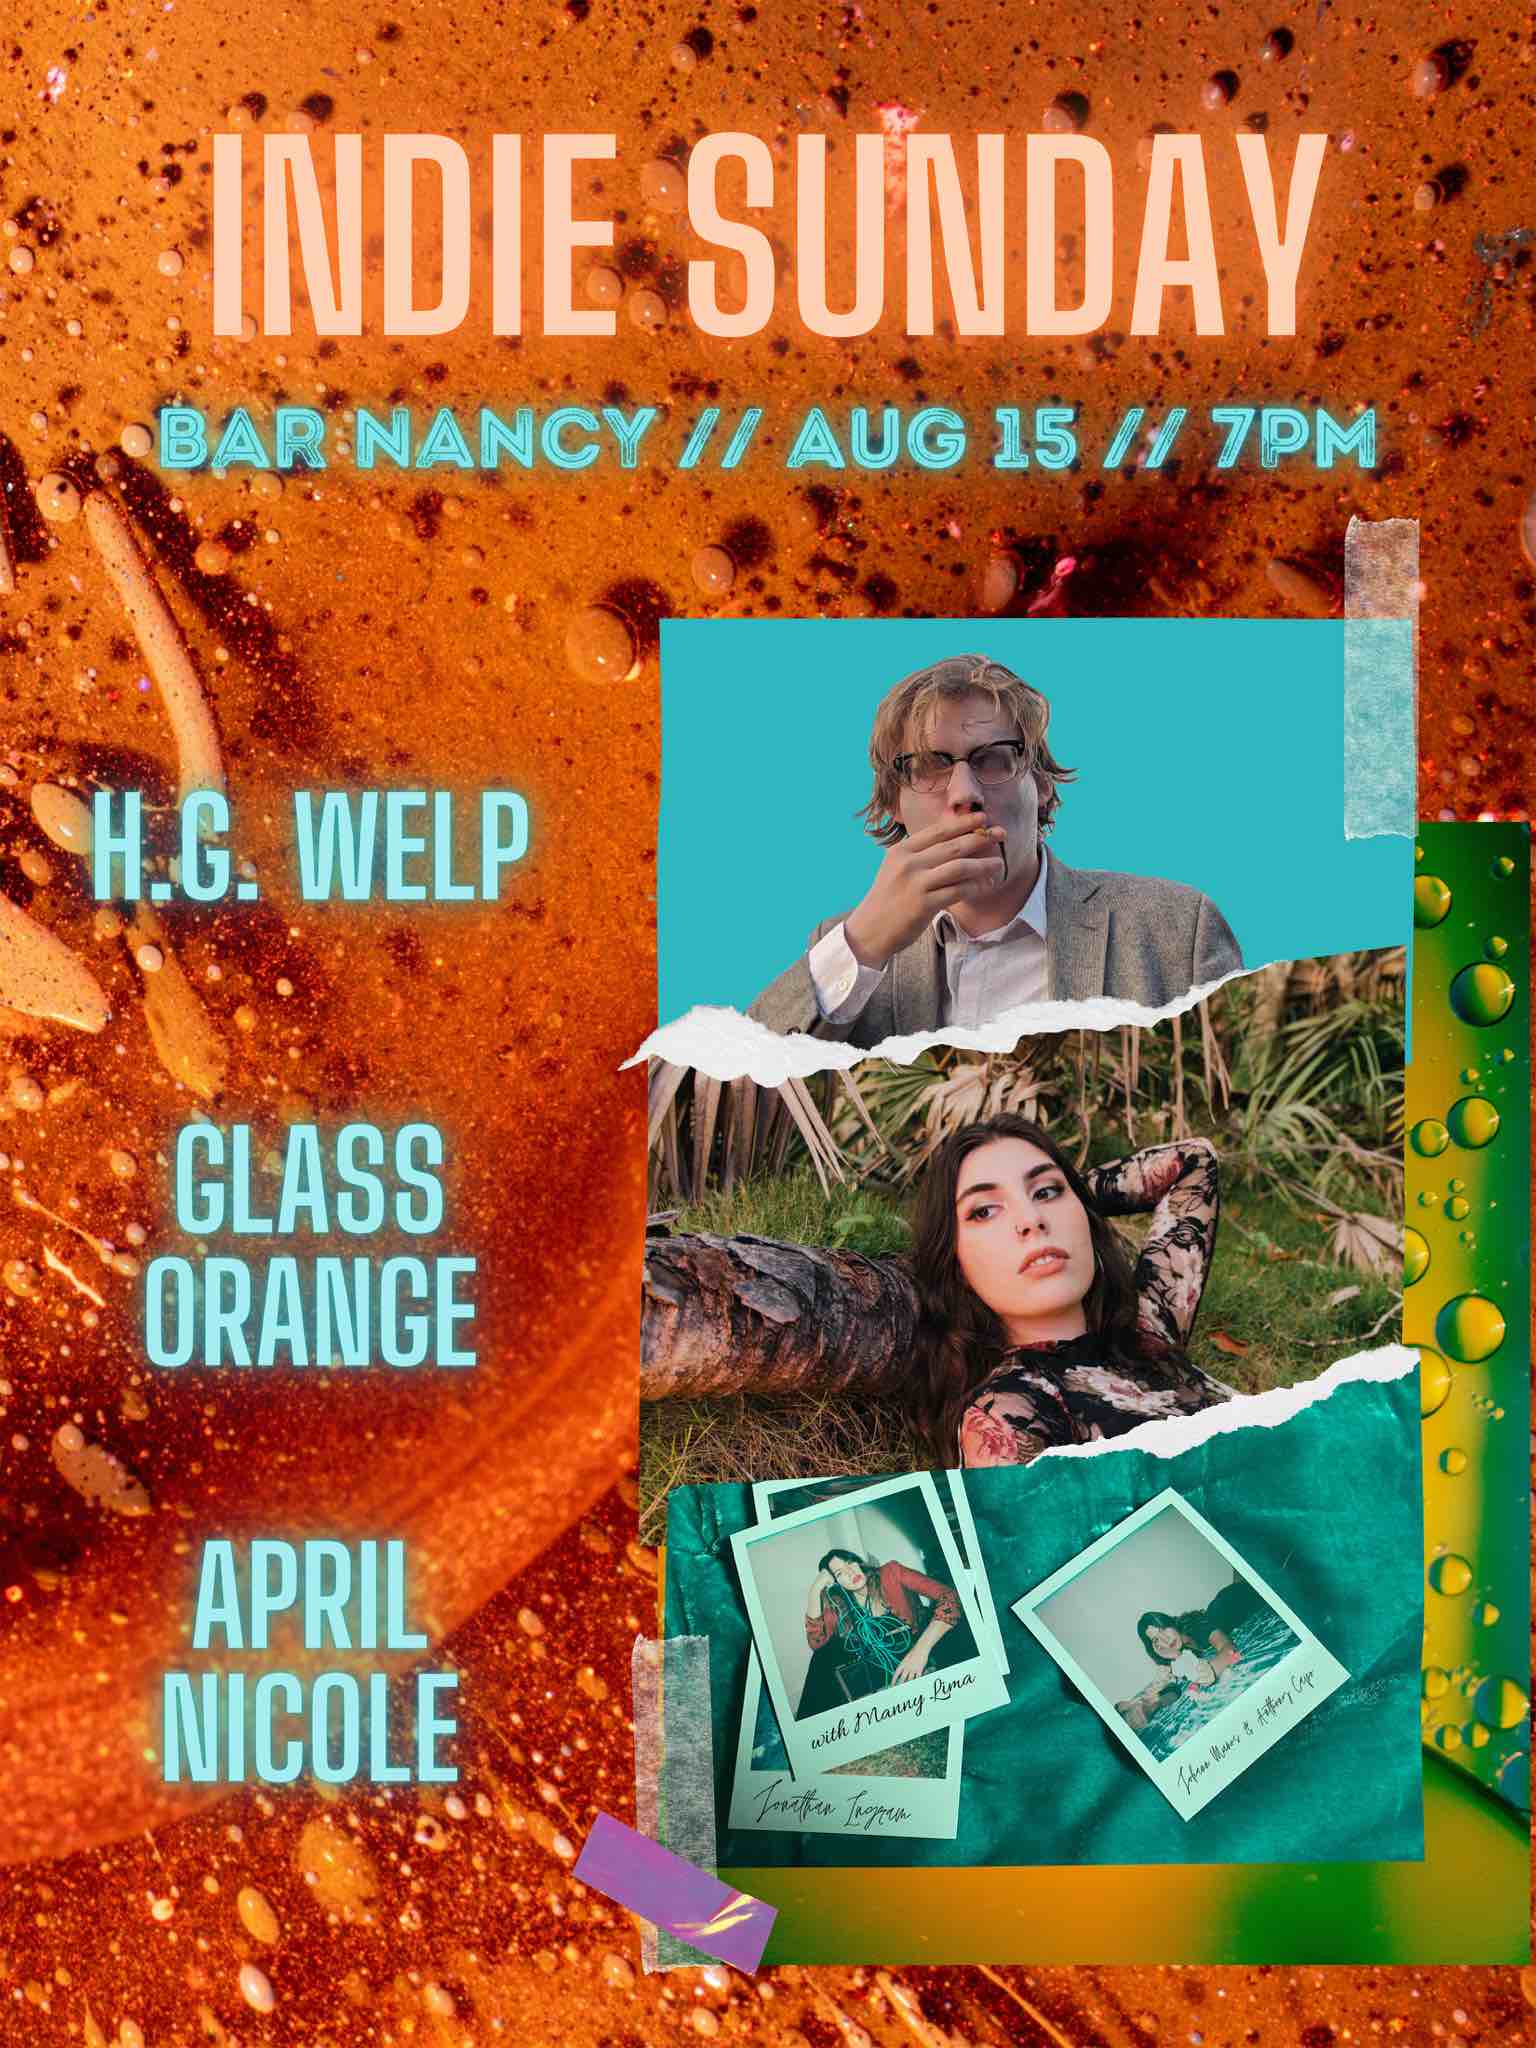 Indie Sunday at Bar Nancy - H.G. Welp - Glass Orange - April Nicole